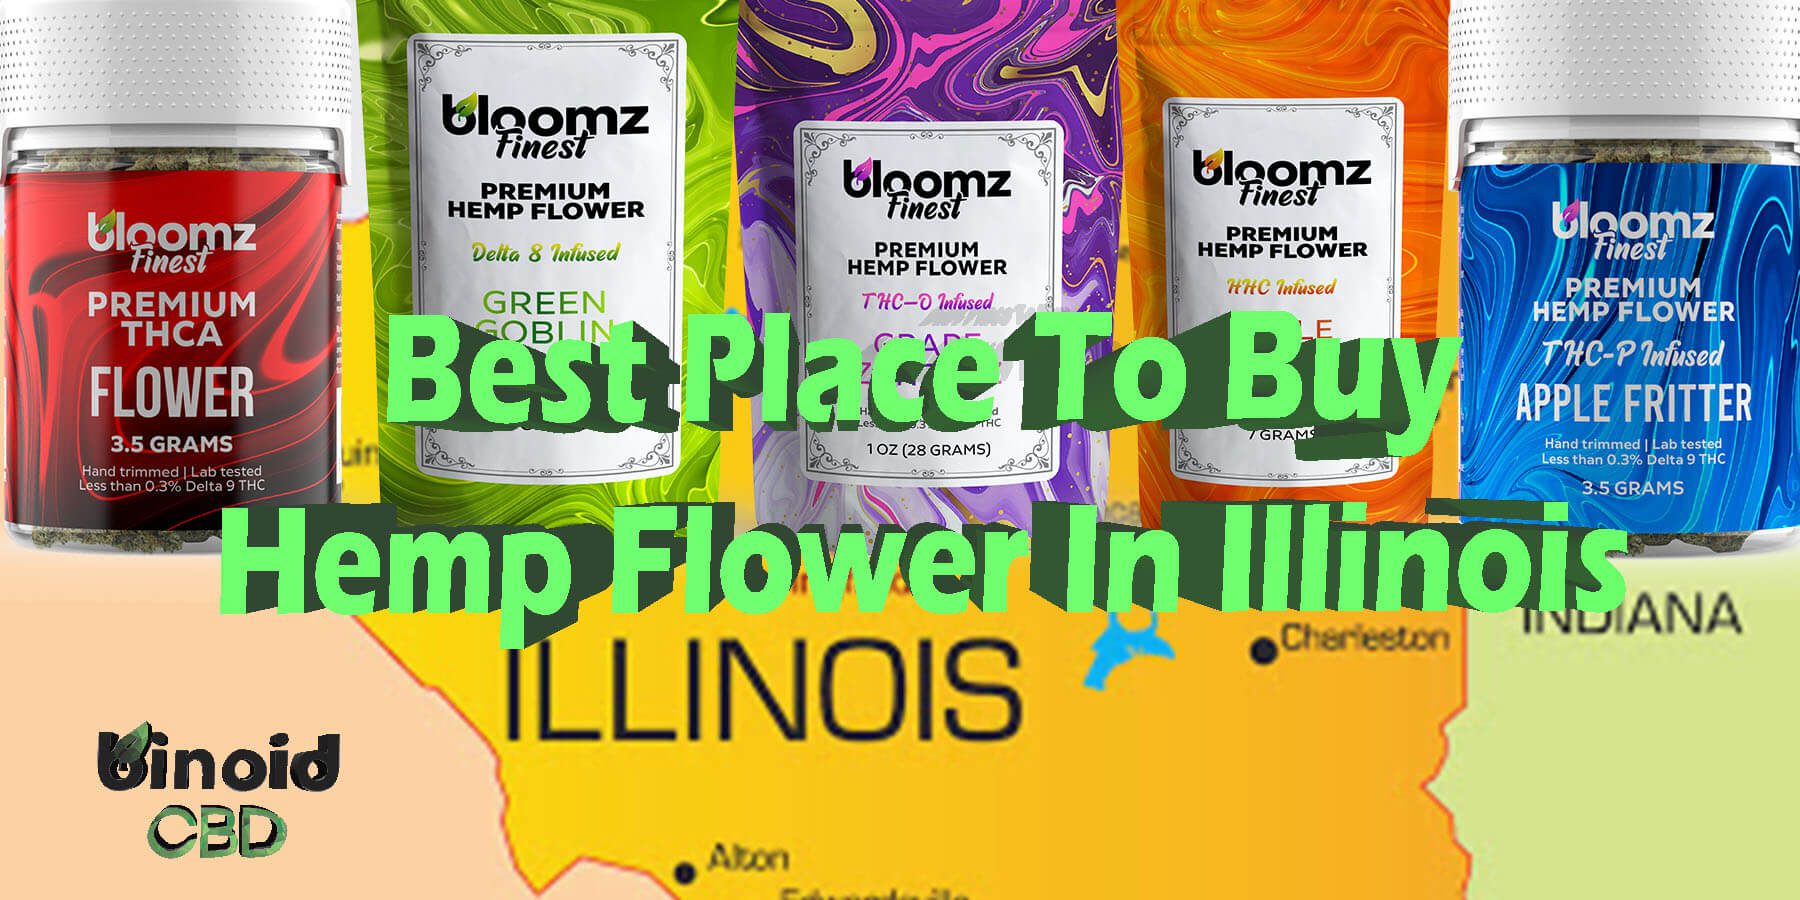 Buy Hemp Flower Illinois Rolls Get Online Near Me For Sale Best Brand Strongest Real Legal Store Shop Reddit Chicago Aurora Springfield Peoria Champaign Elgin Naperville Rockford Joliet Evanston